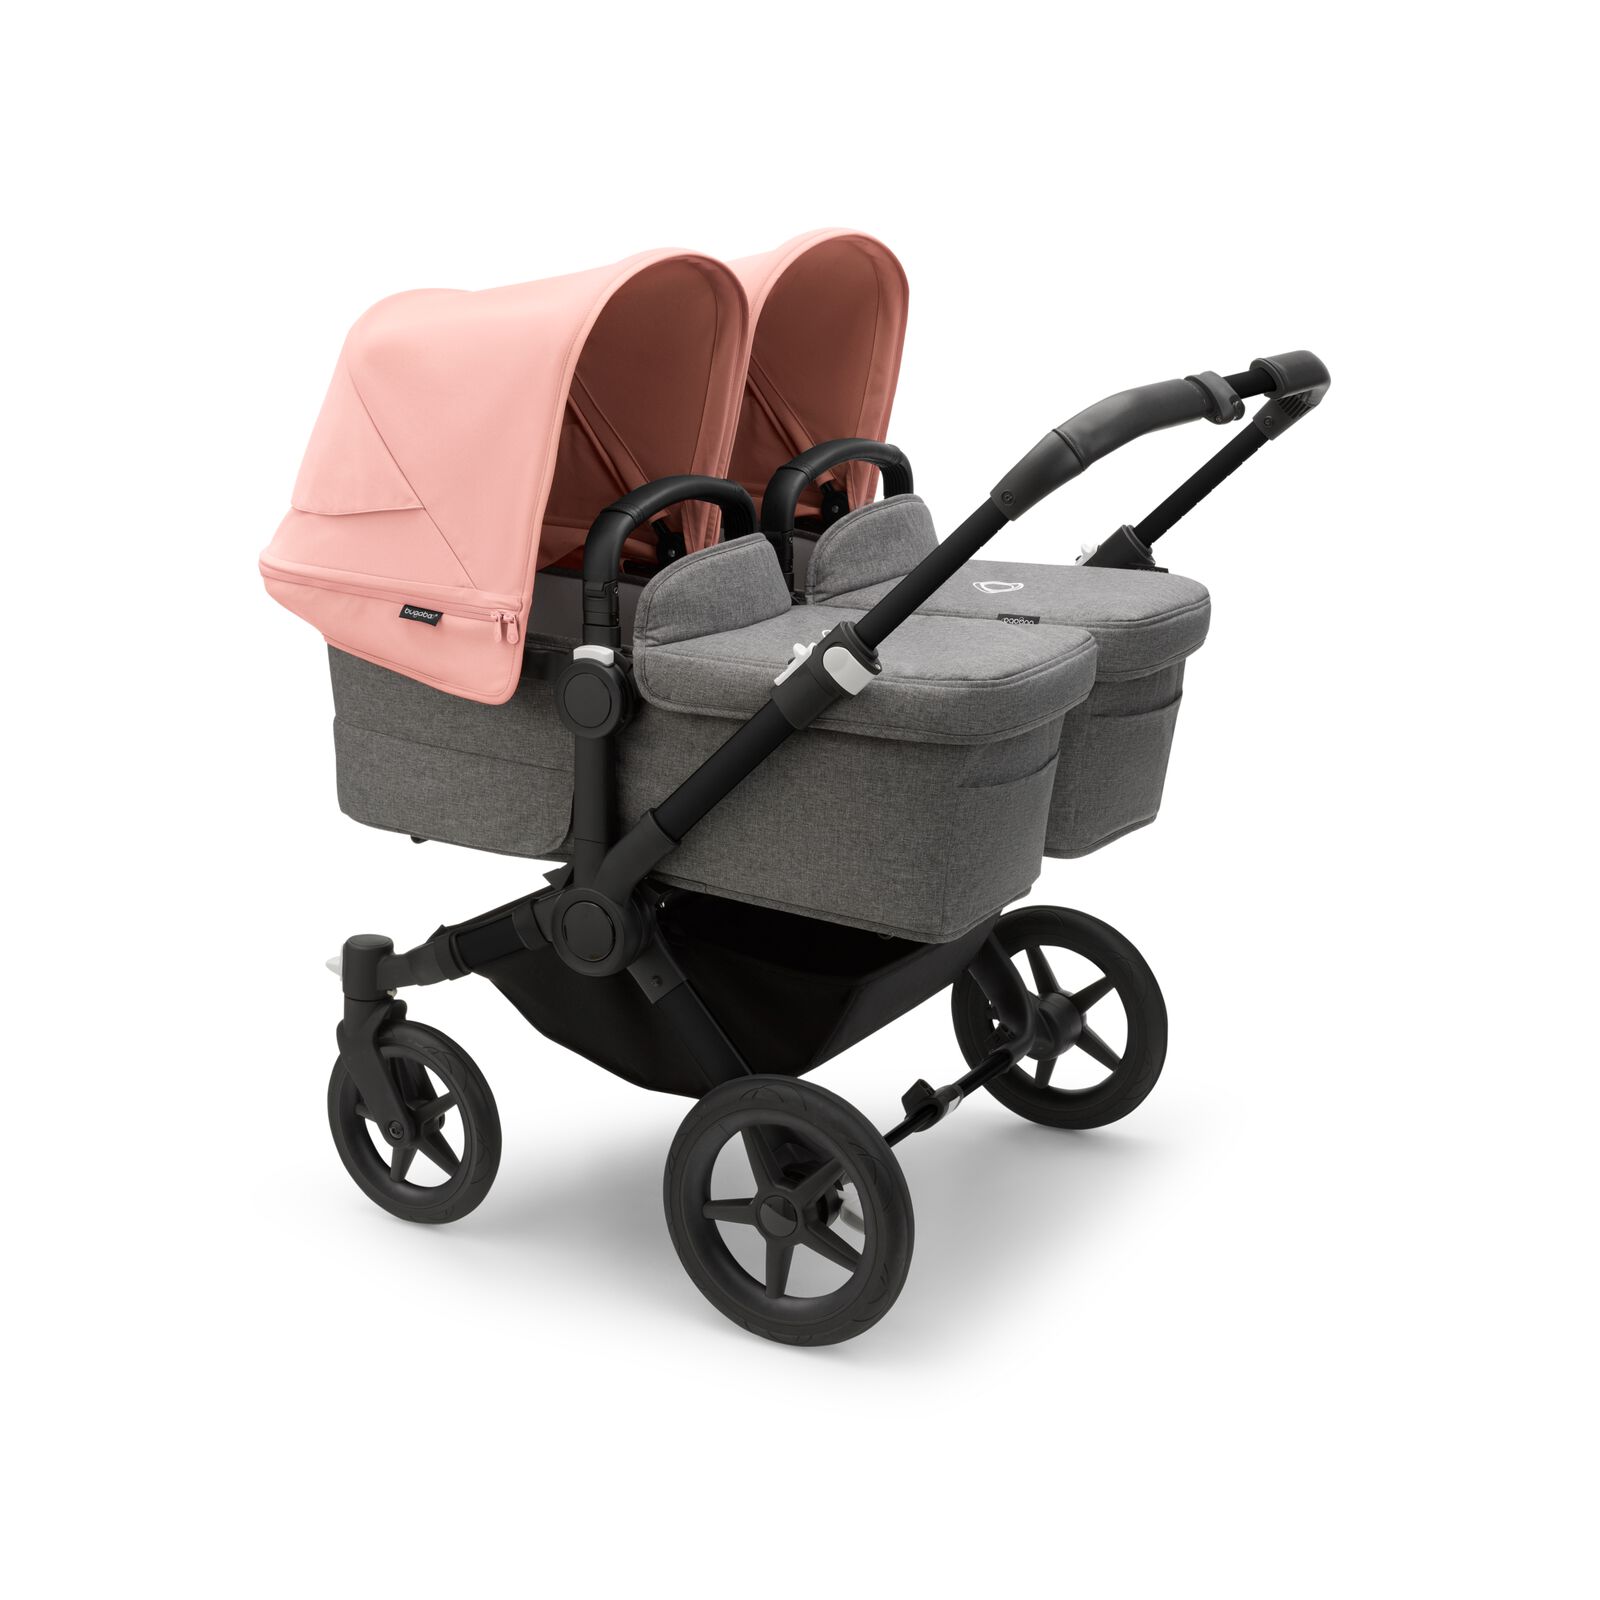 Bugaboo Donkey 5 Twin bassinet and seat stroller black base, grey mélange fabrics, morning pink sun canopy